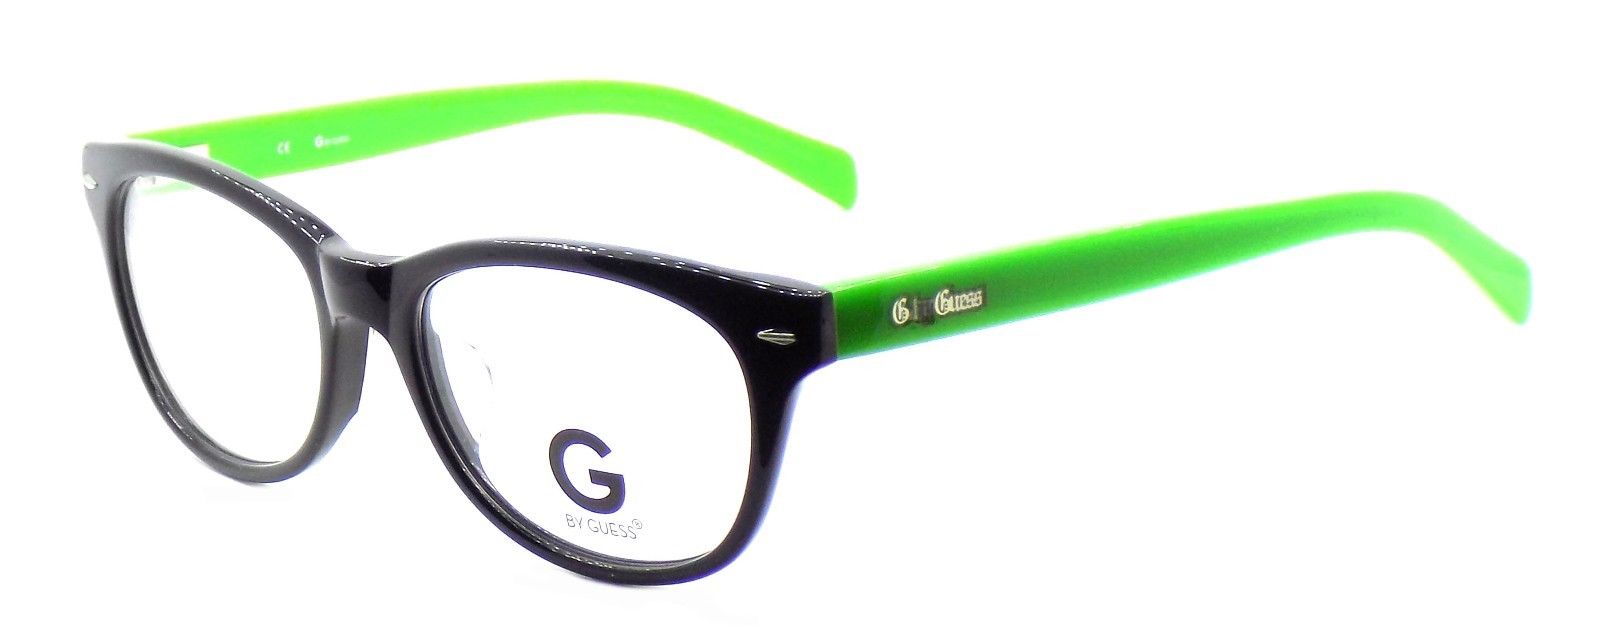 1-G by Guess GGA201 BLKGRN ASIAN FIT Eyeglasses Frames 53-18-140 Black + Case-715583676091-IKSpecs